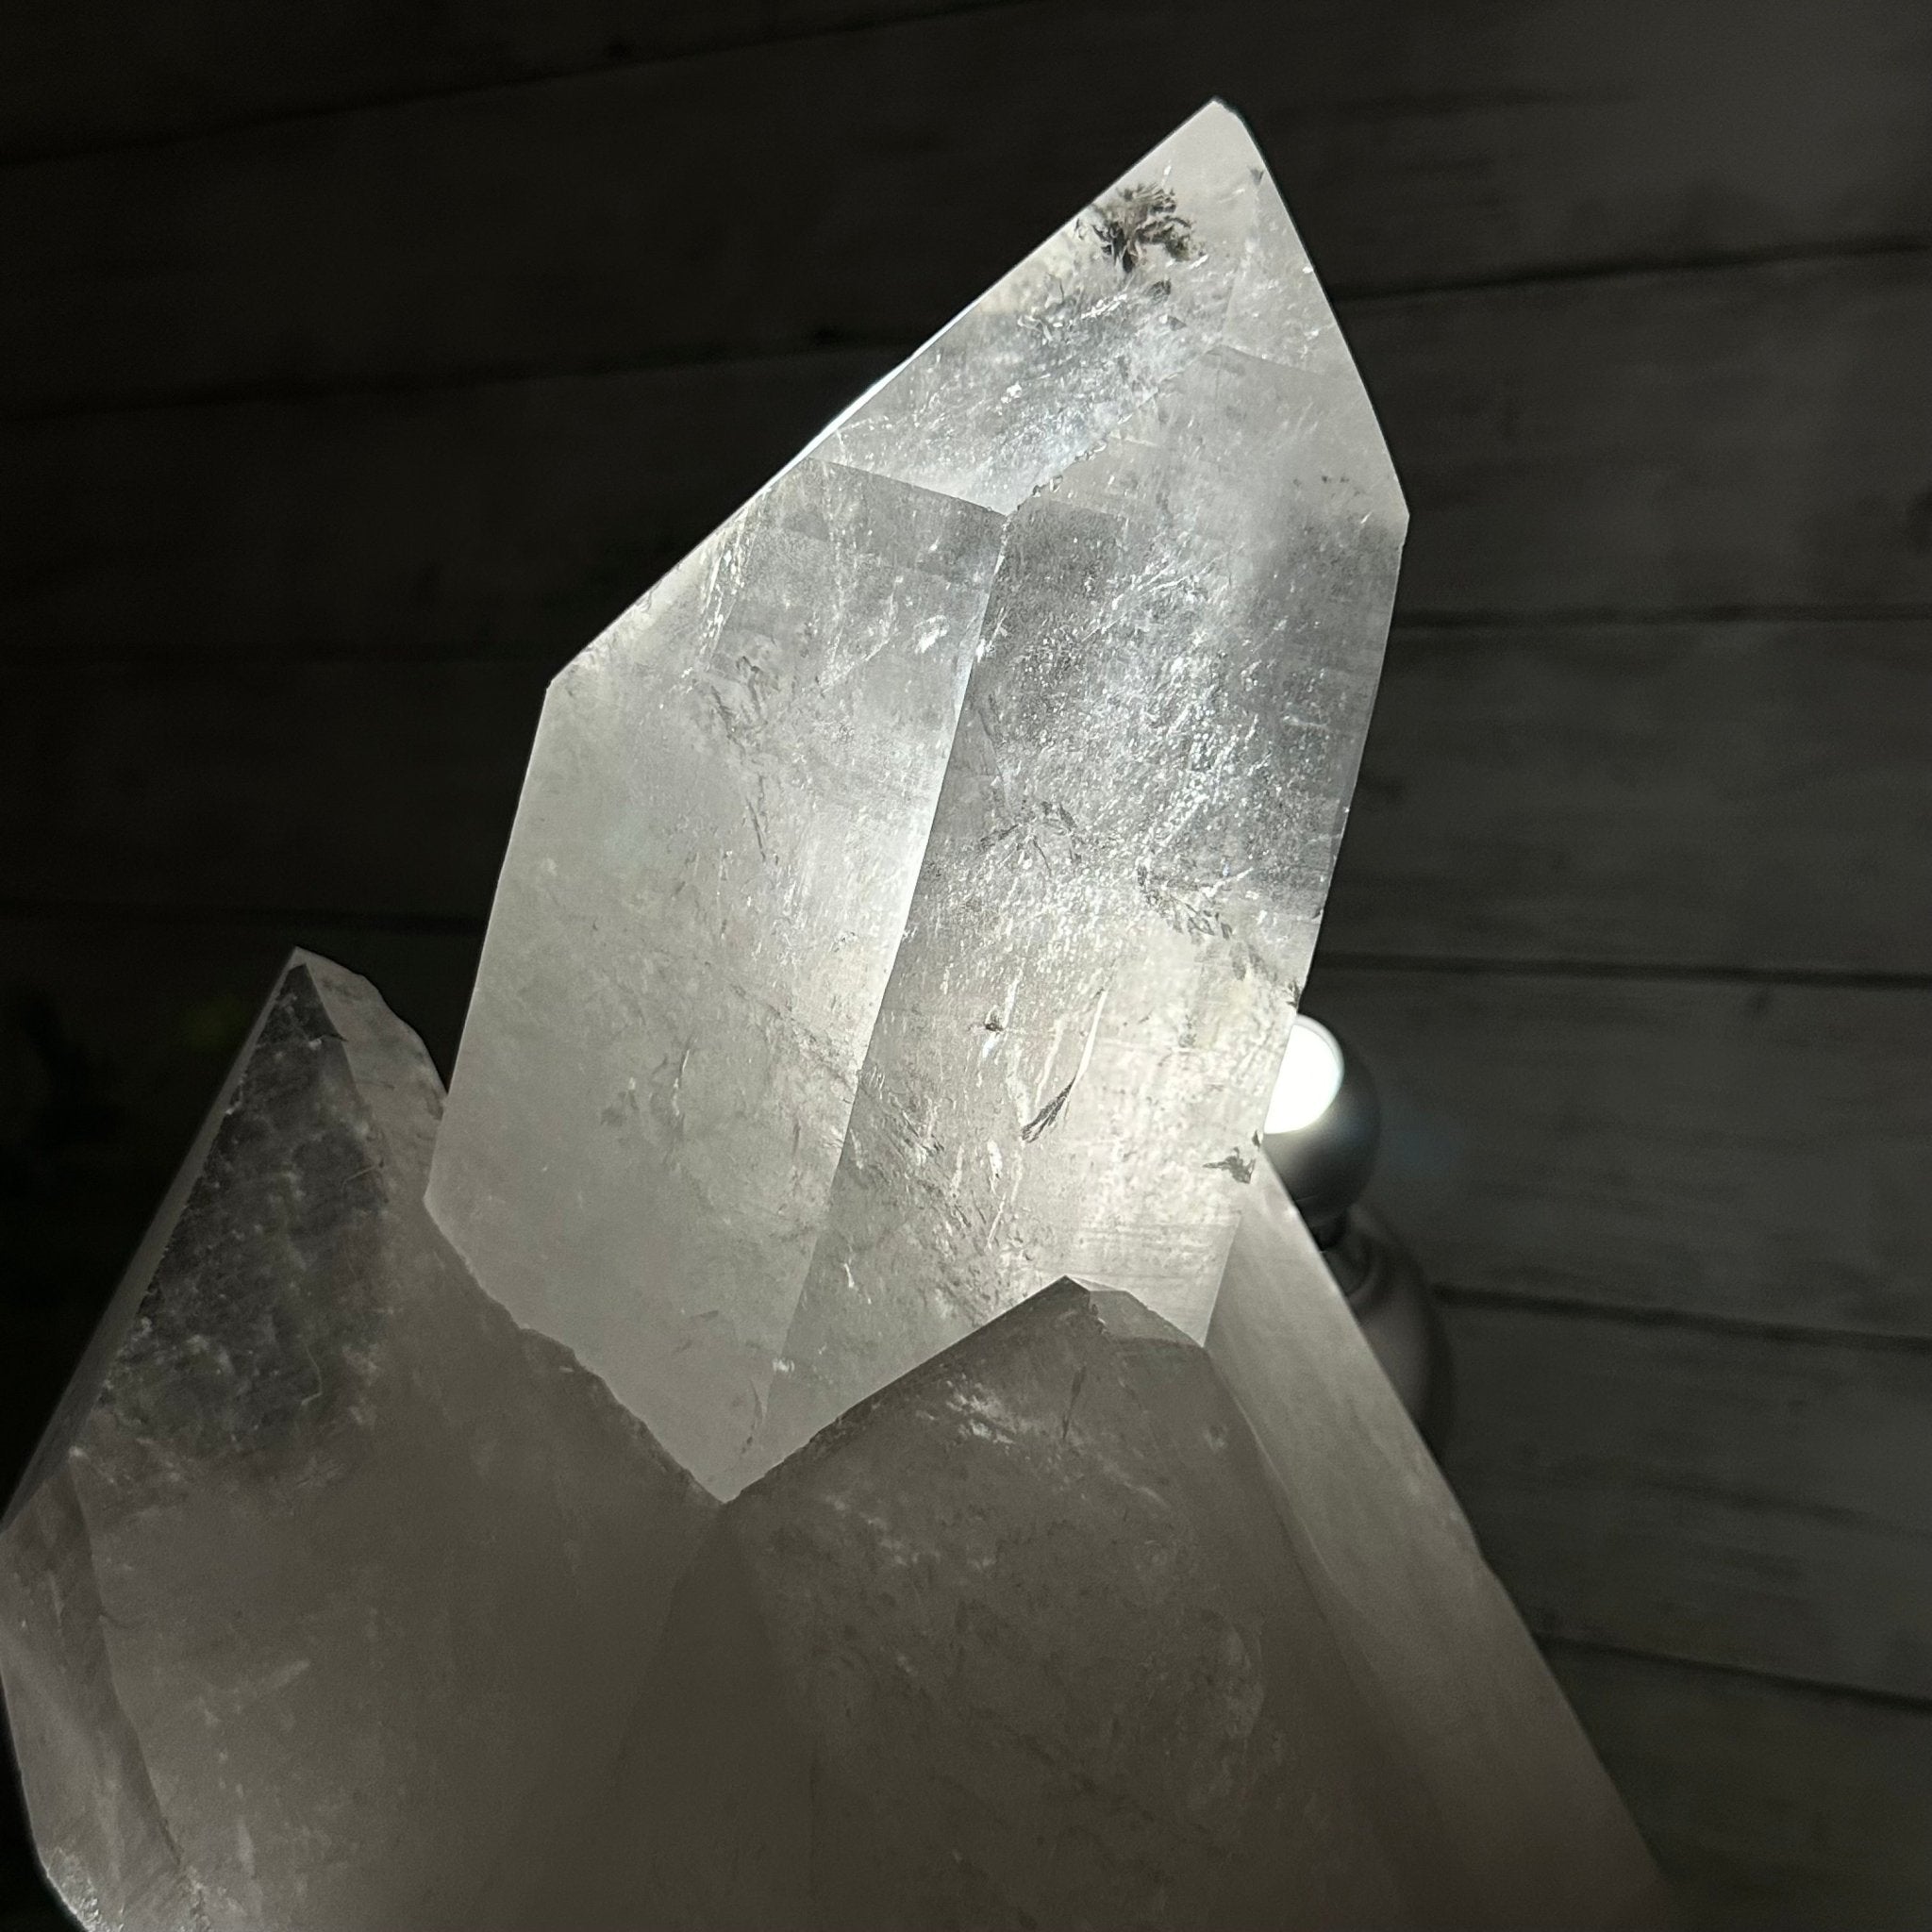 Clear Quartz Crystal Point on Rotating Base, 38.7 lbs & 20.5" Tall #3120CQ-007 - Brazil GemsBrazil GemsClear Quartz Crystal Point on Rotating Base, 38.7 lbs & 20.5" Tall #3120CQ-007Crystal Points3120CQ-007